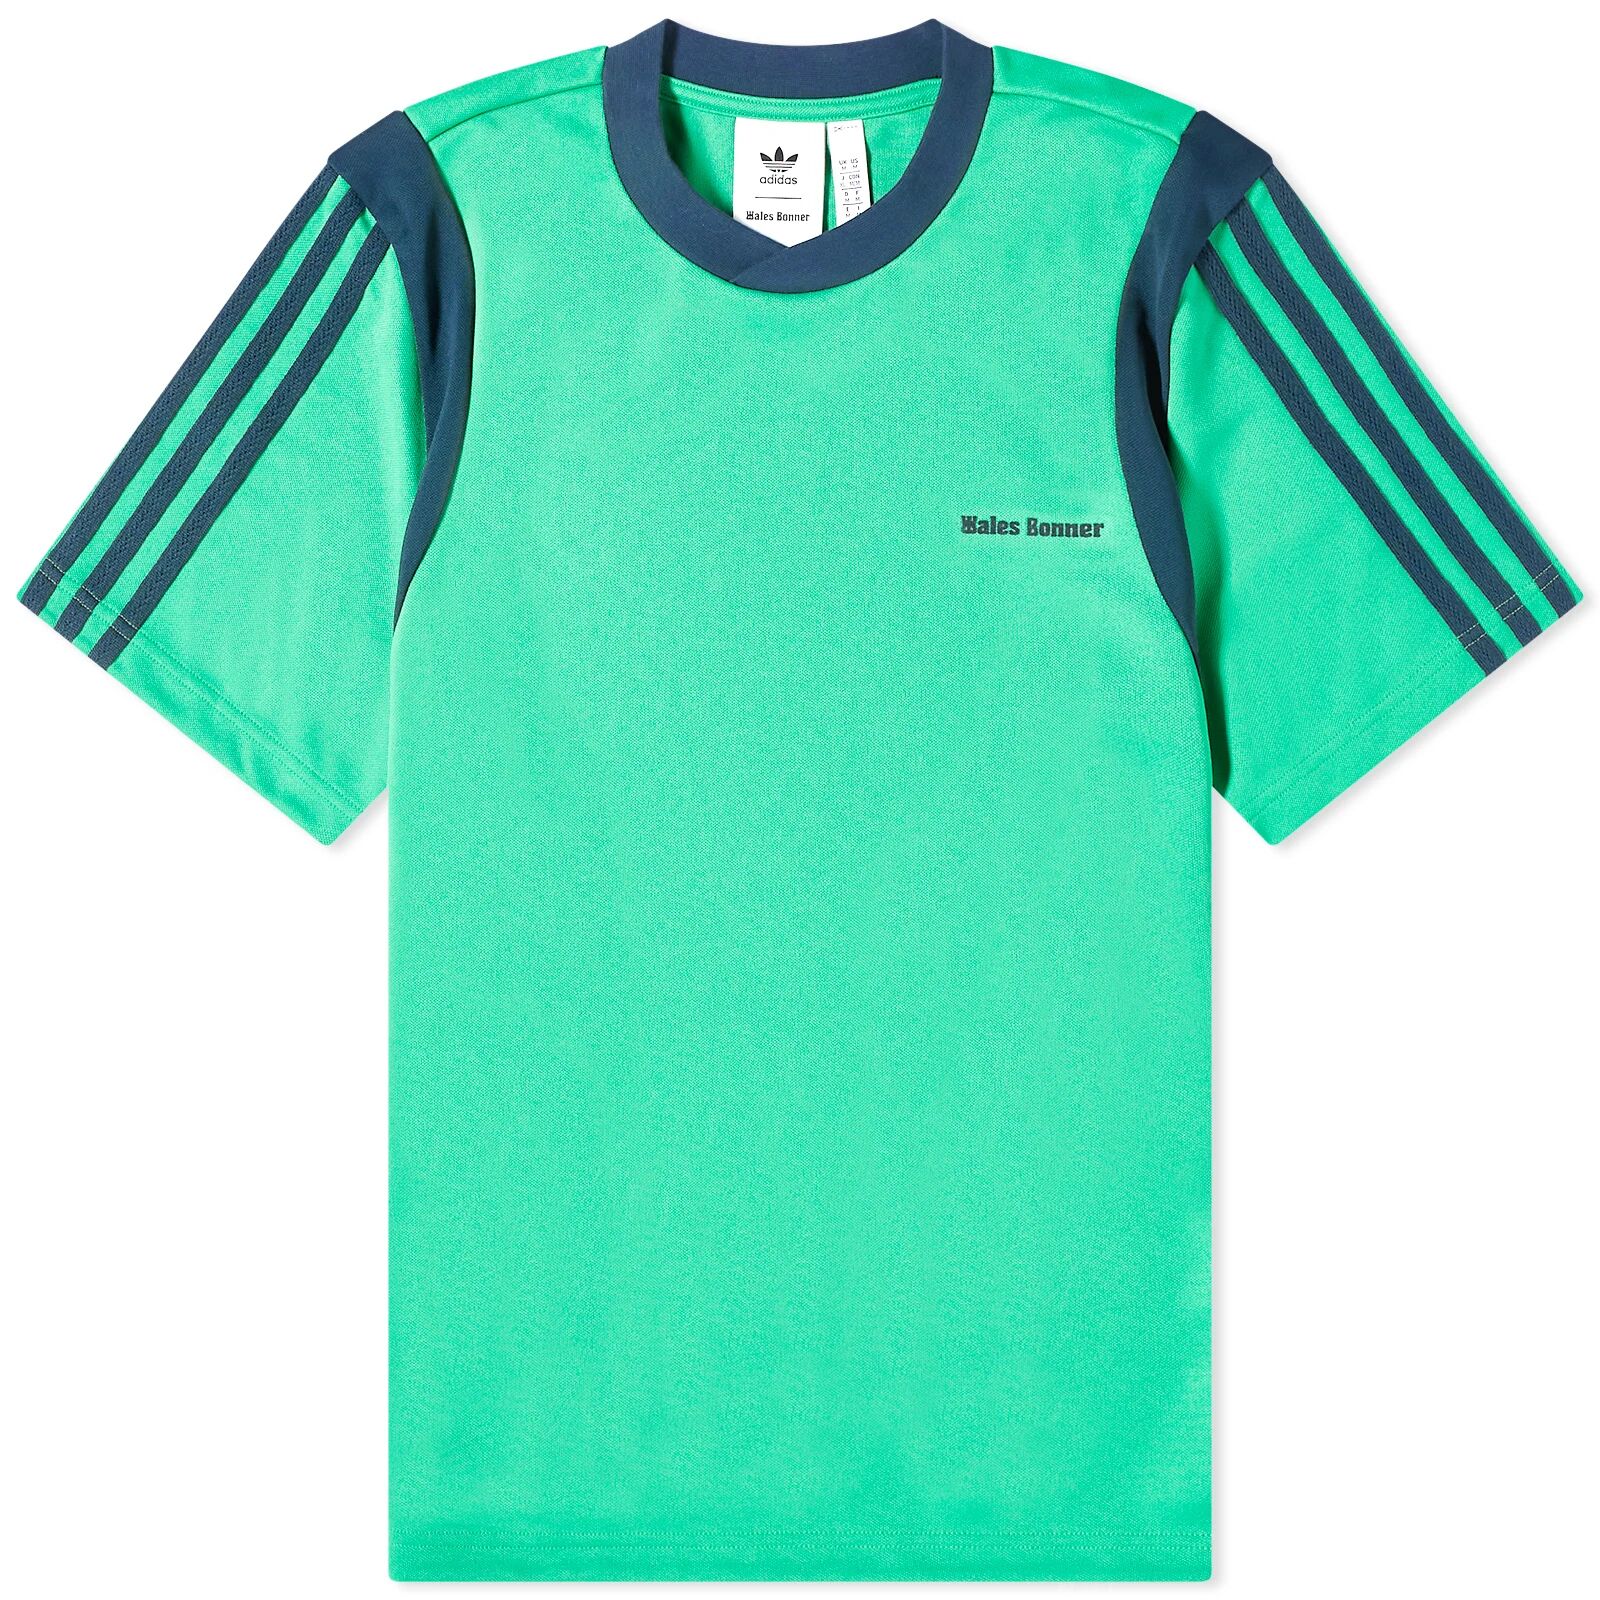 Adidas Men's x Wales Bonner Football Shirt in Vivid Green, Size Large